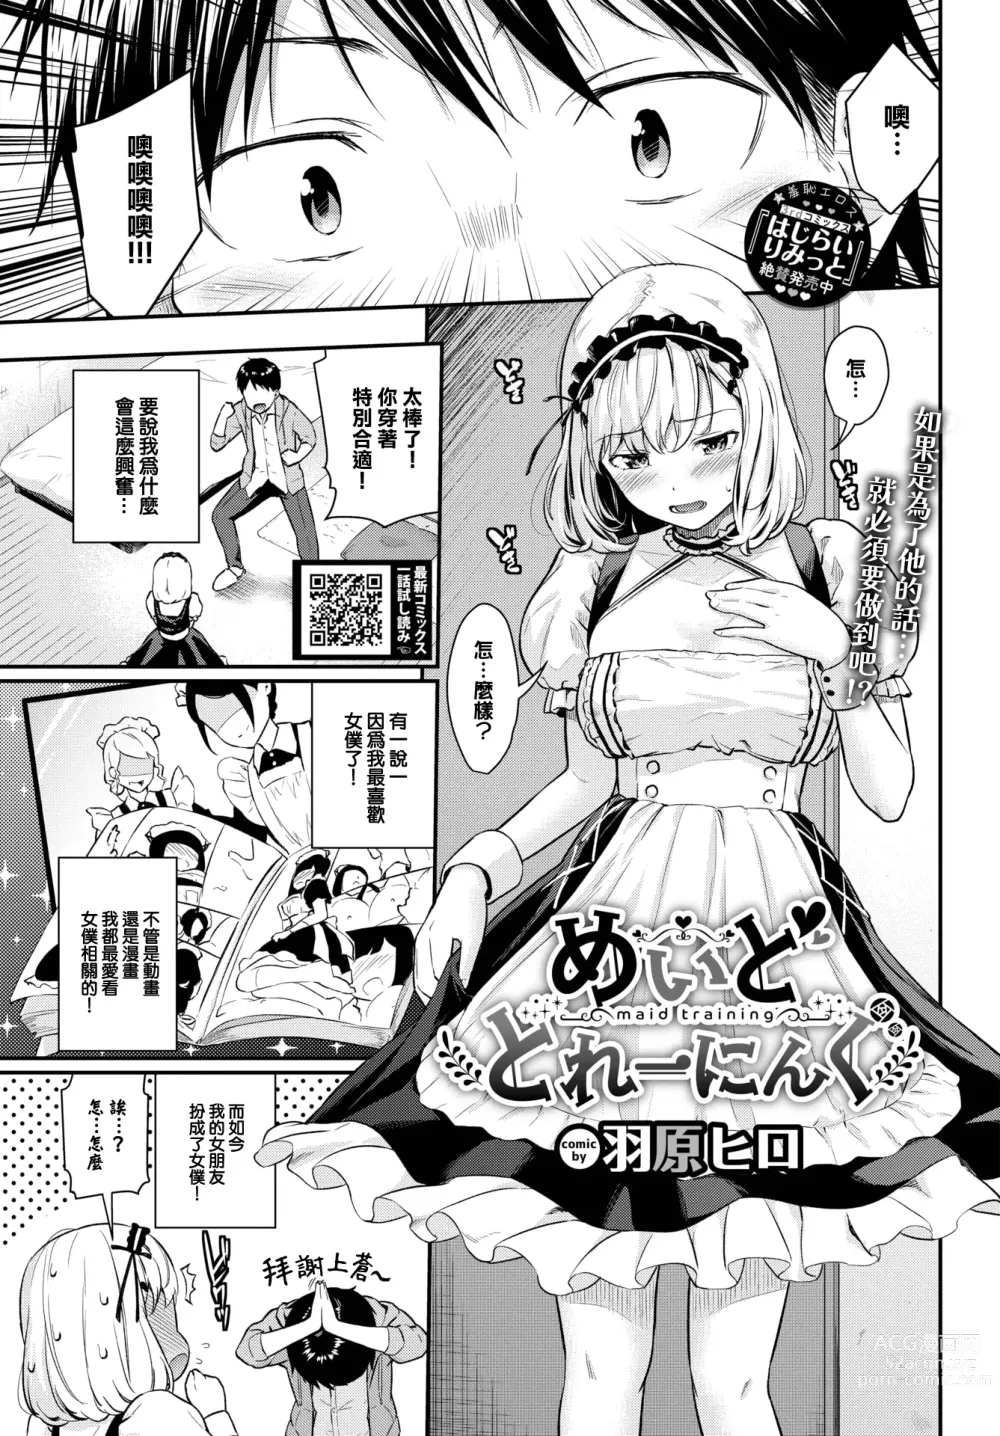 Page 2 of manga Maid Training